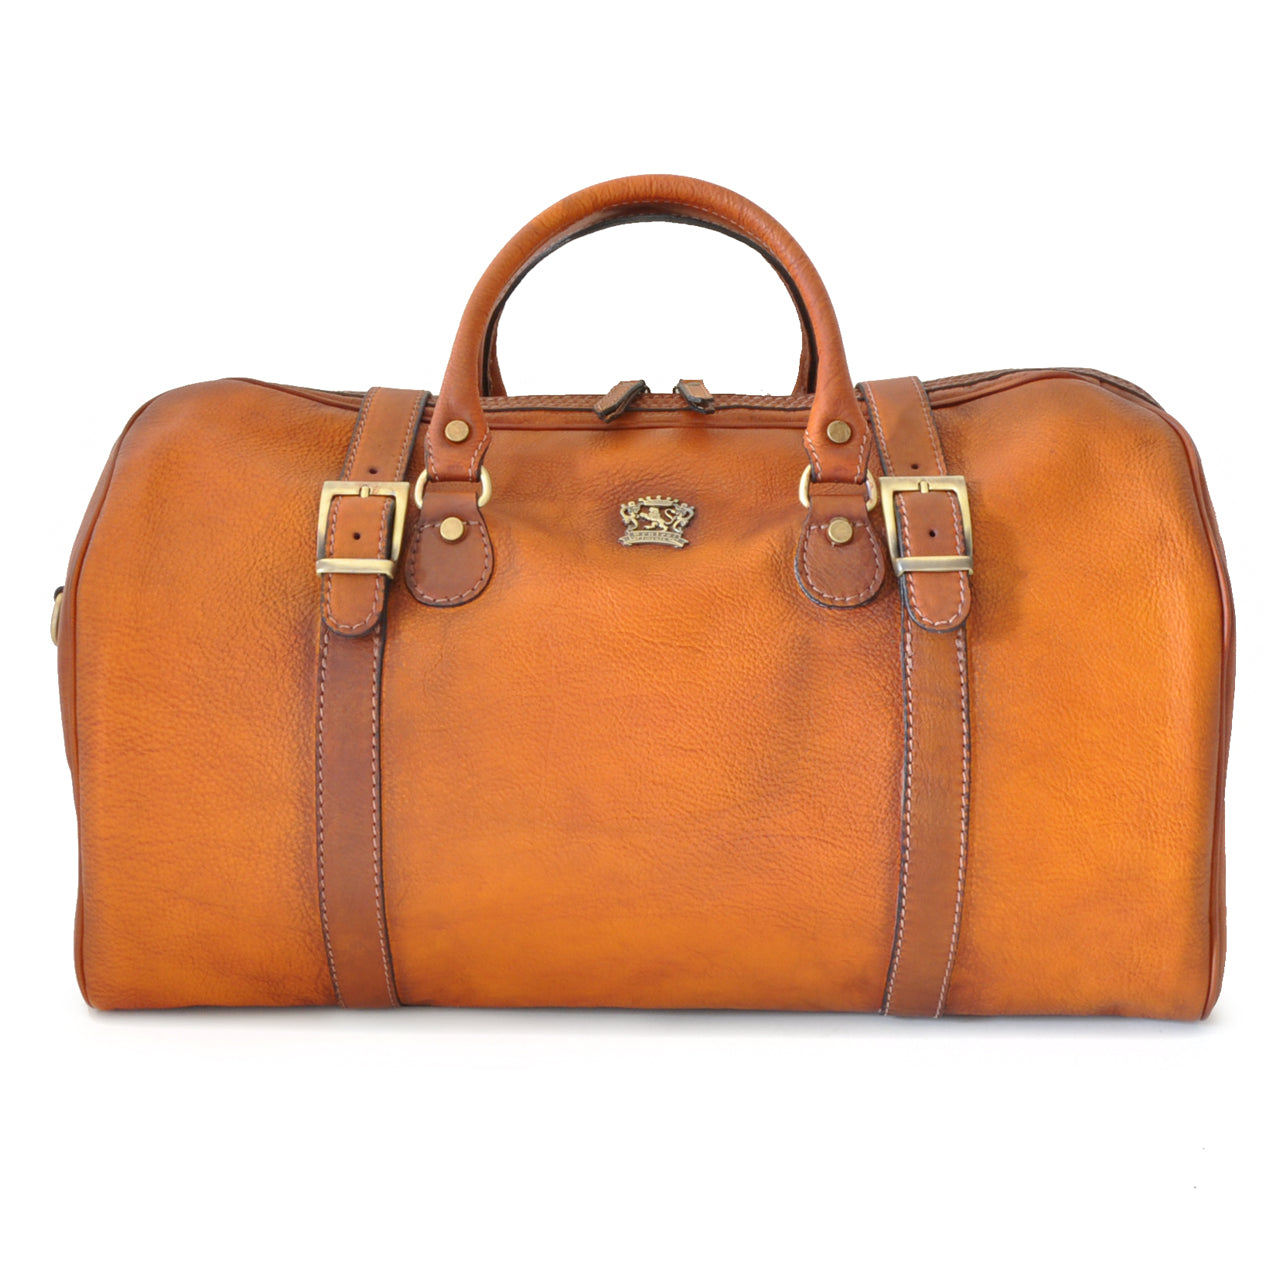 Pratesi Travel bag Perito Moreno in genuine Italian leather